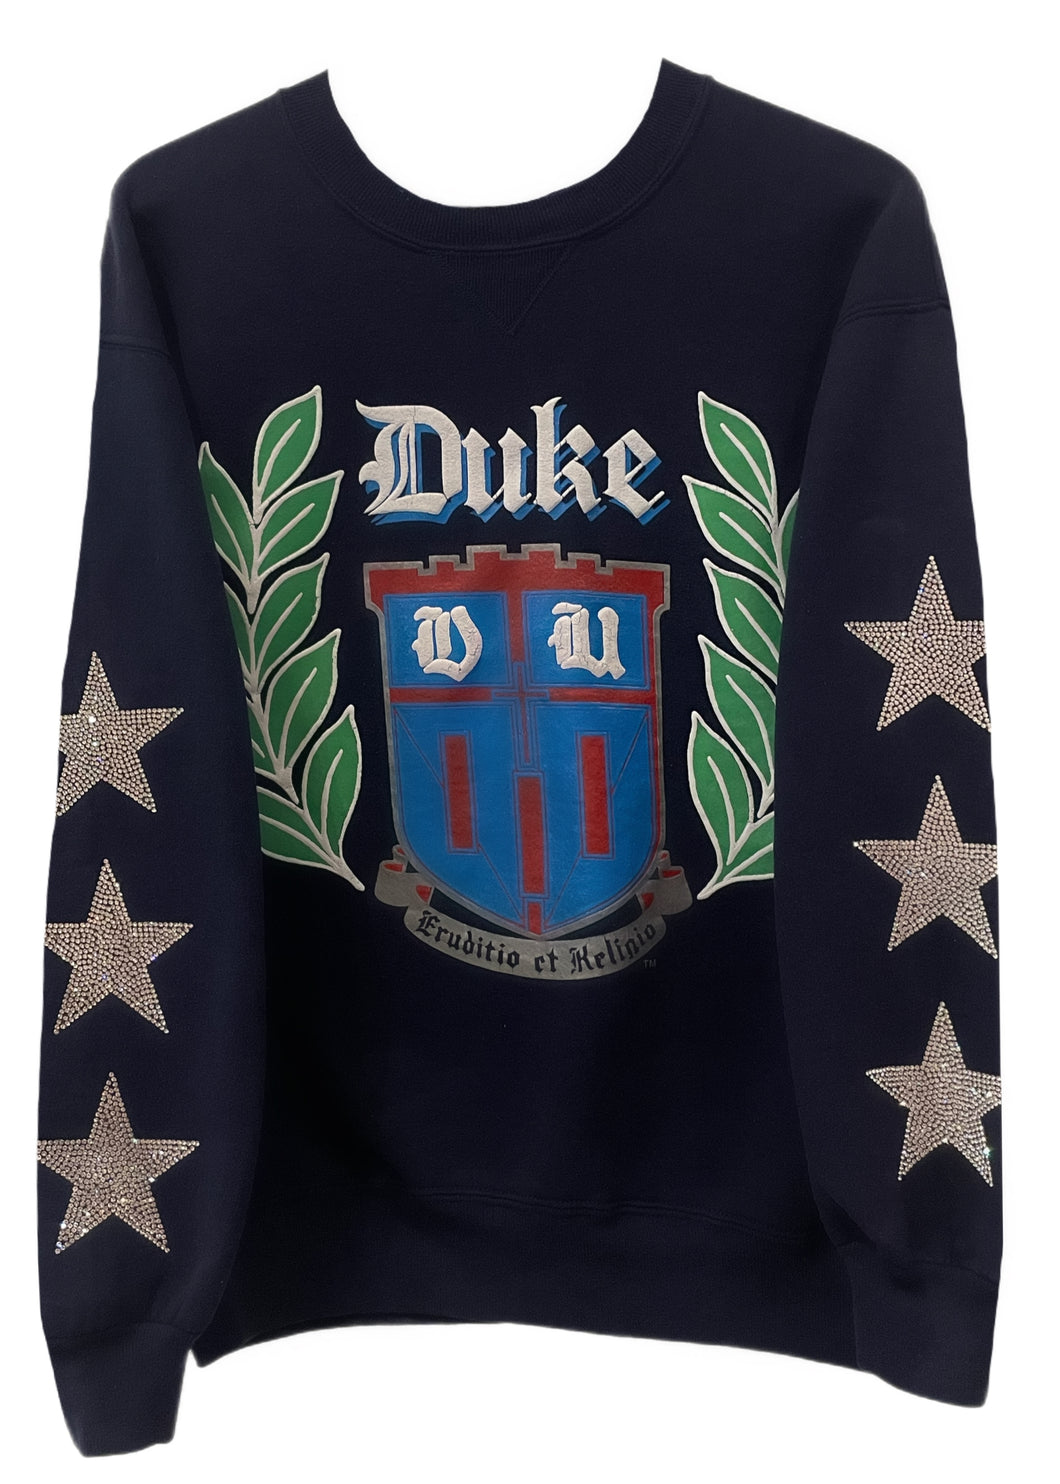 Duke Univeristy, One of a KIND Vintage Sweatshirt with Three Crystal Star Design